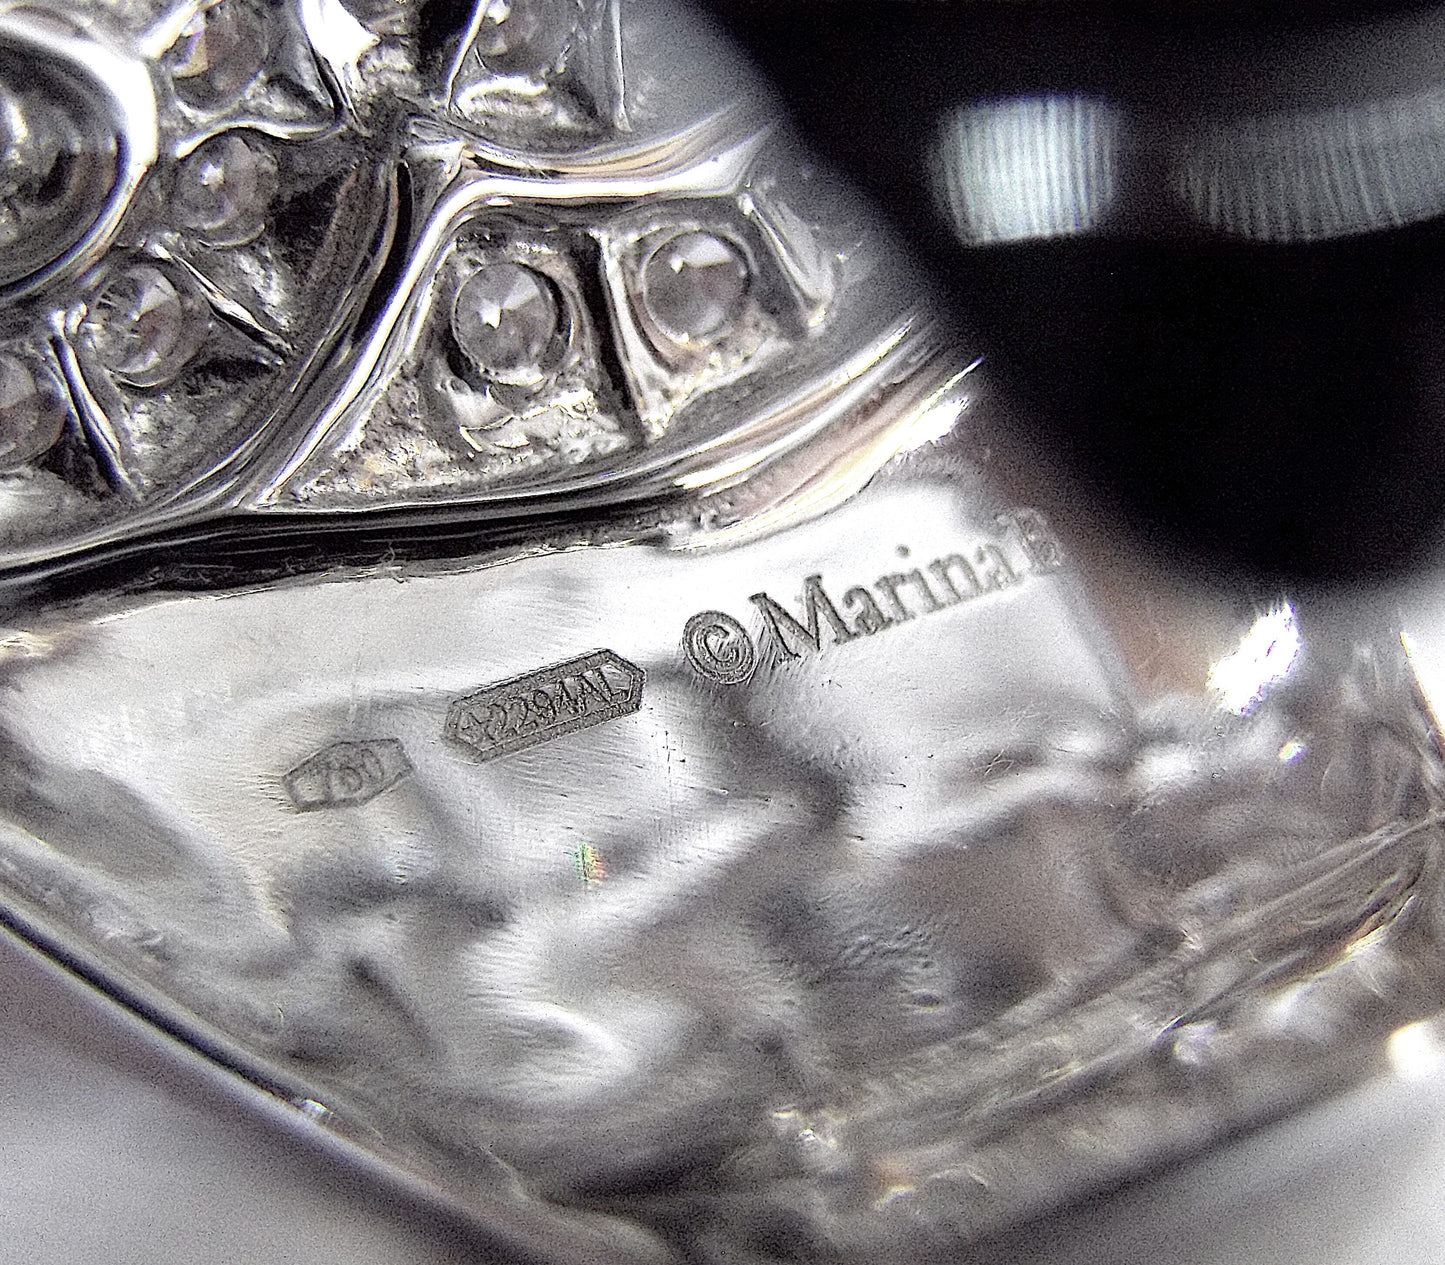 18K White Gold Marina B 'Onda' Diamond Ring